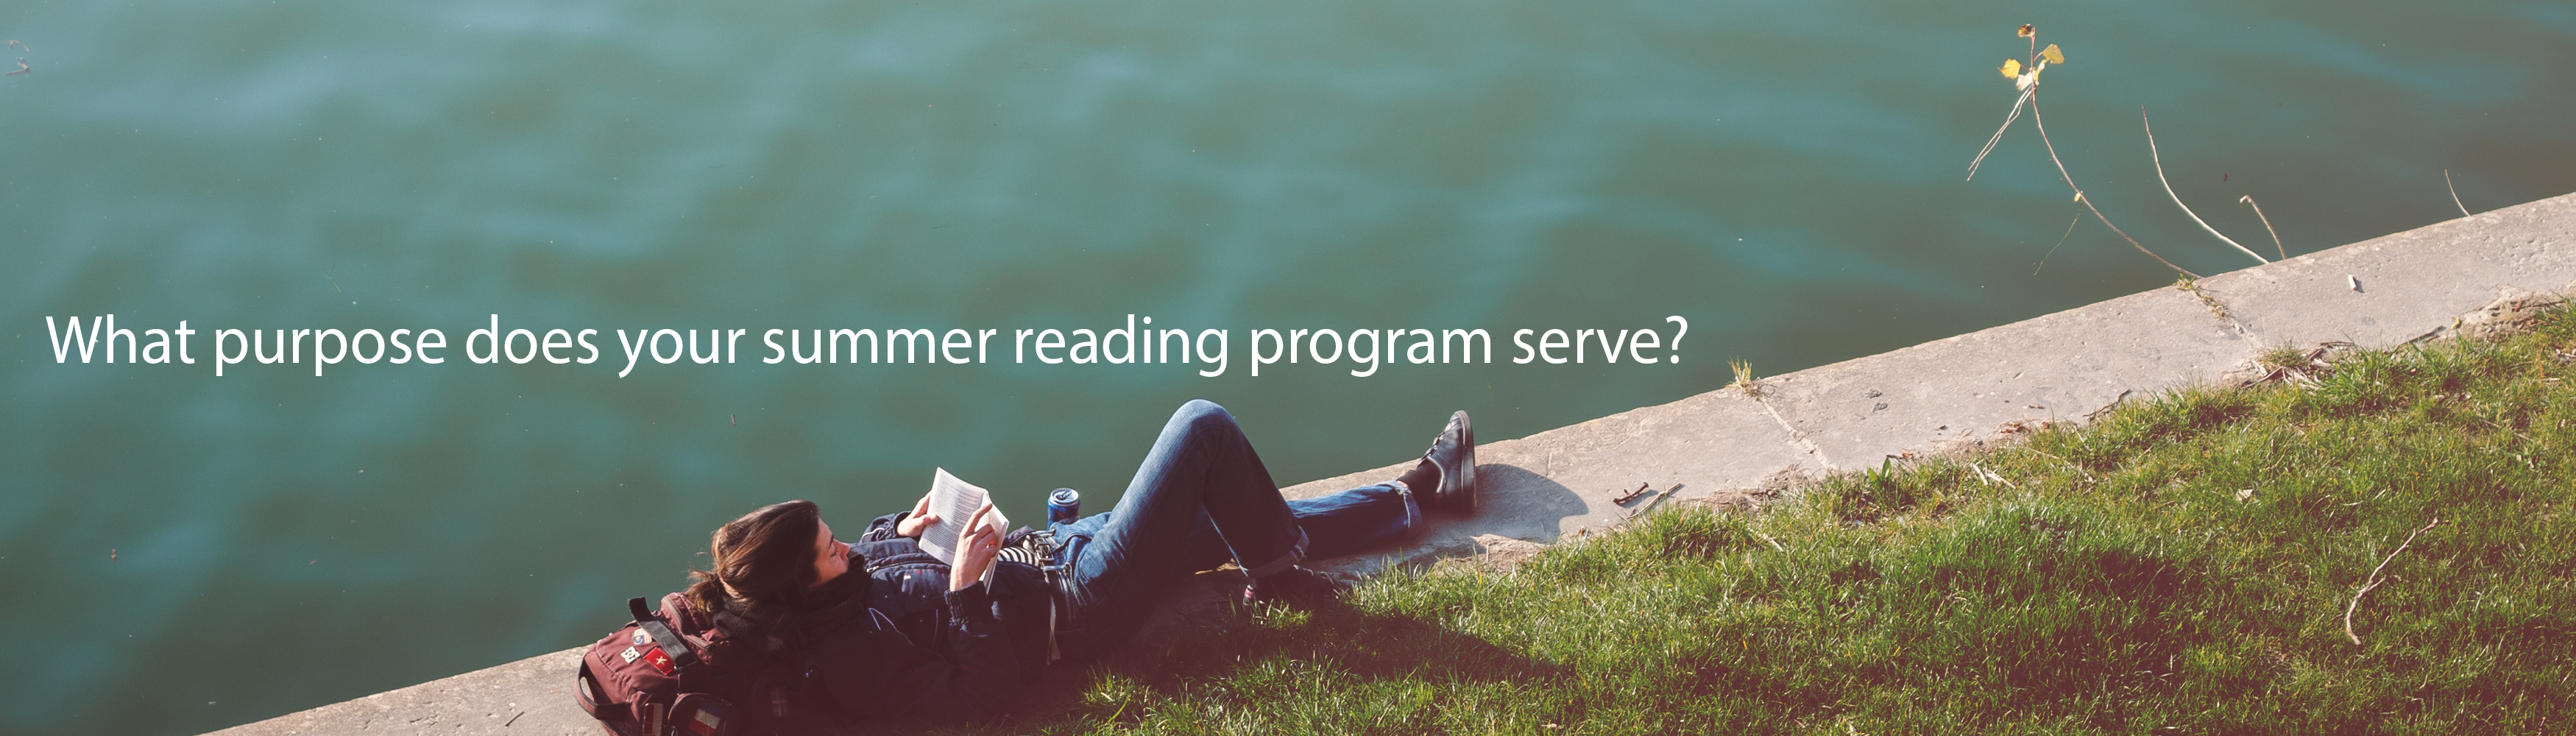 Summer Reading Program Purpose